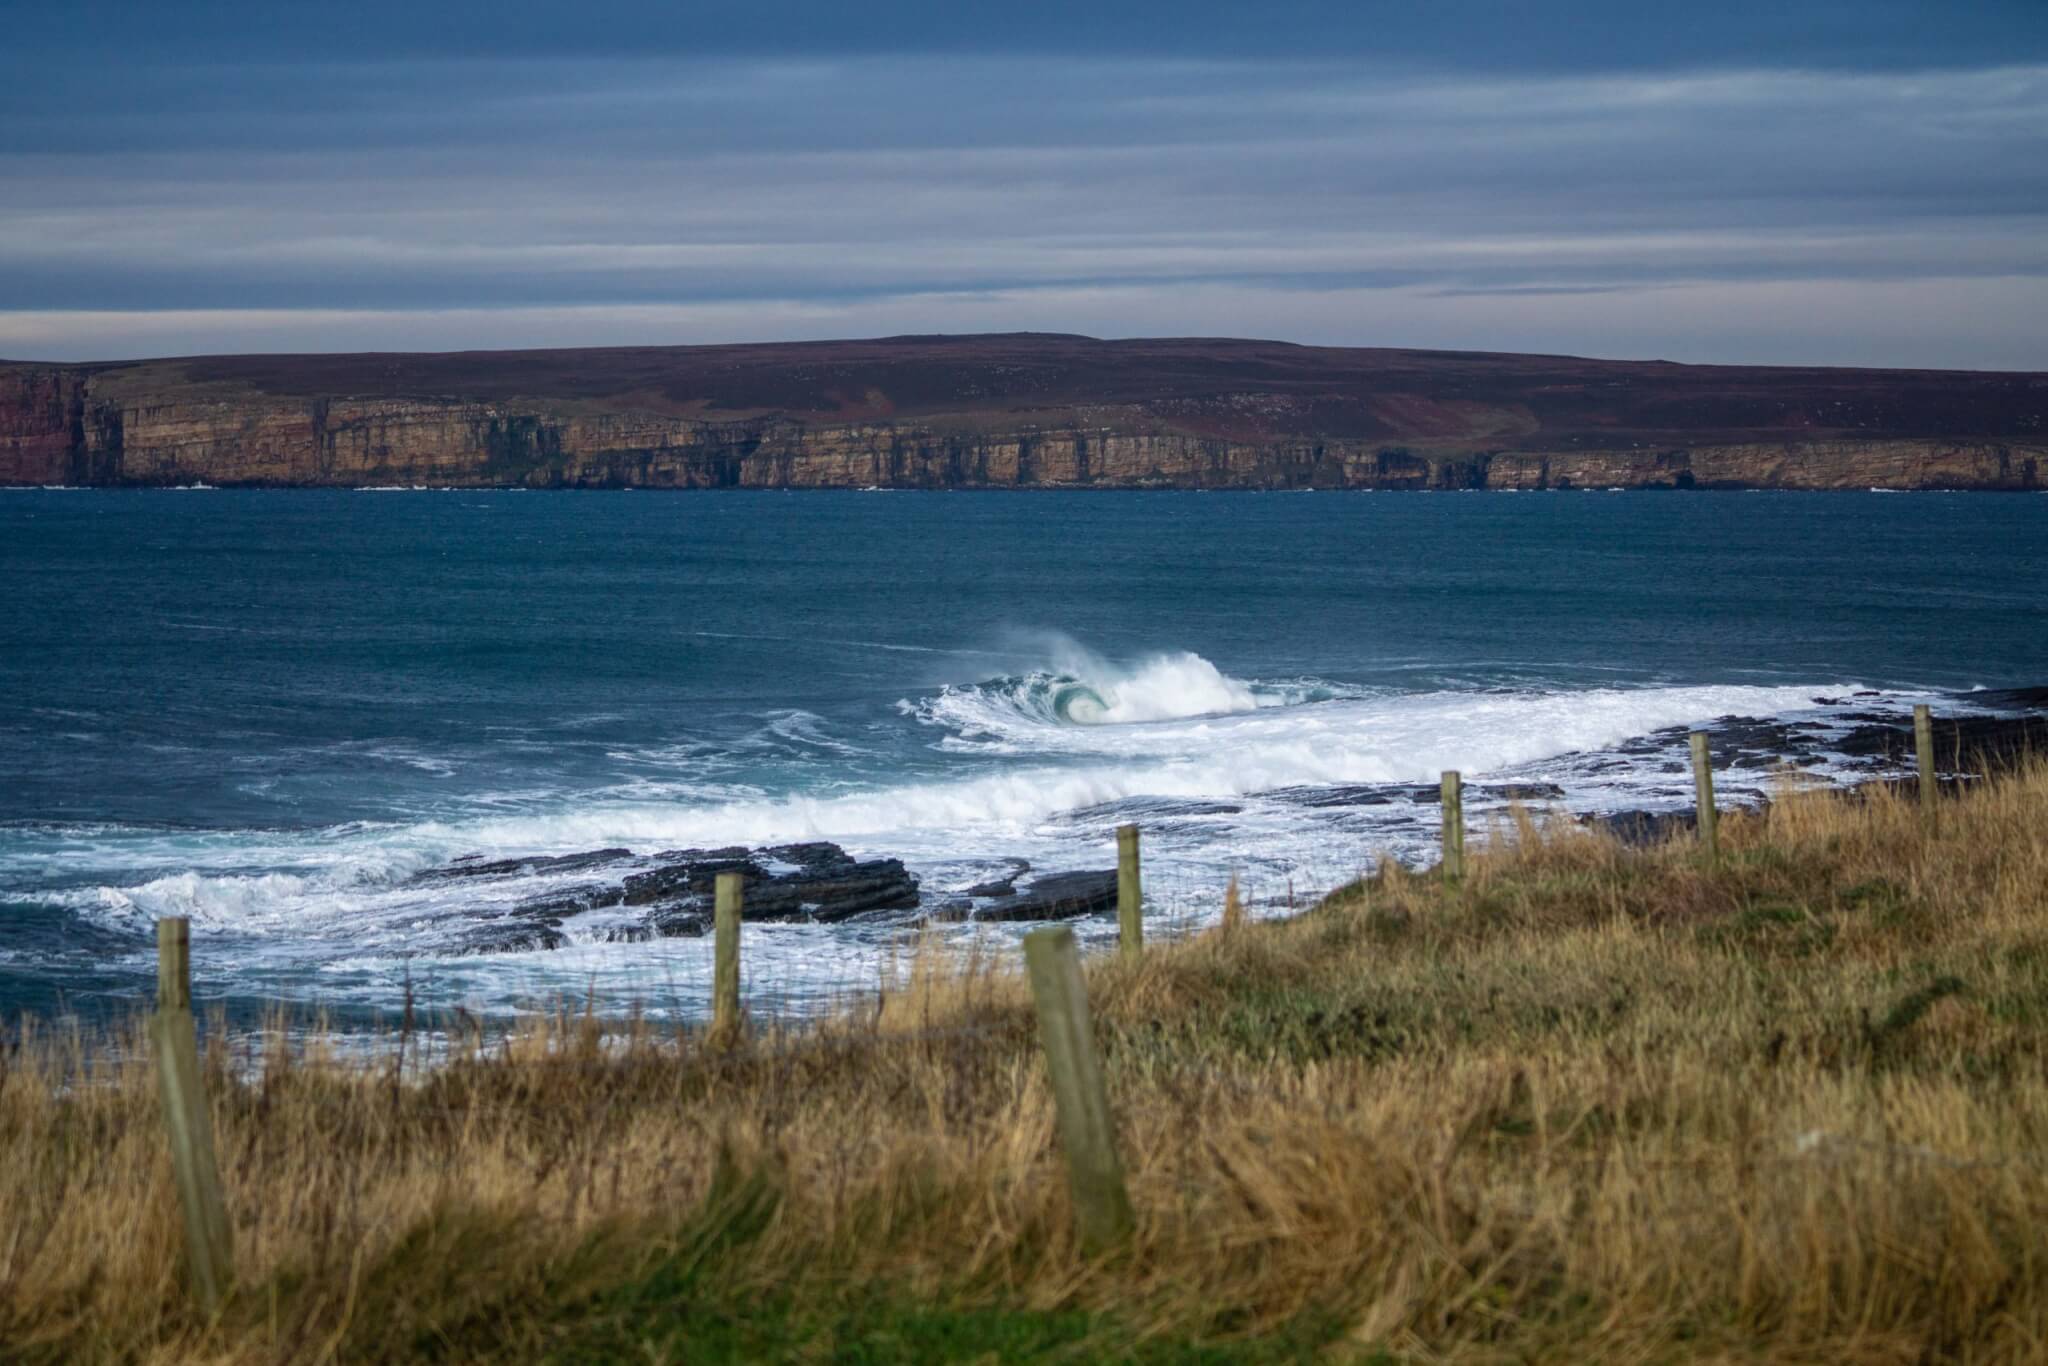 A photograph of waves crashing off the coast of Scotland